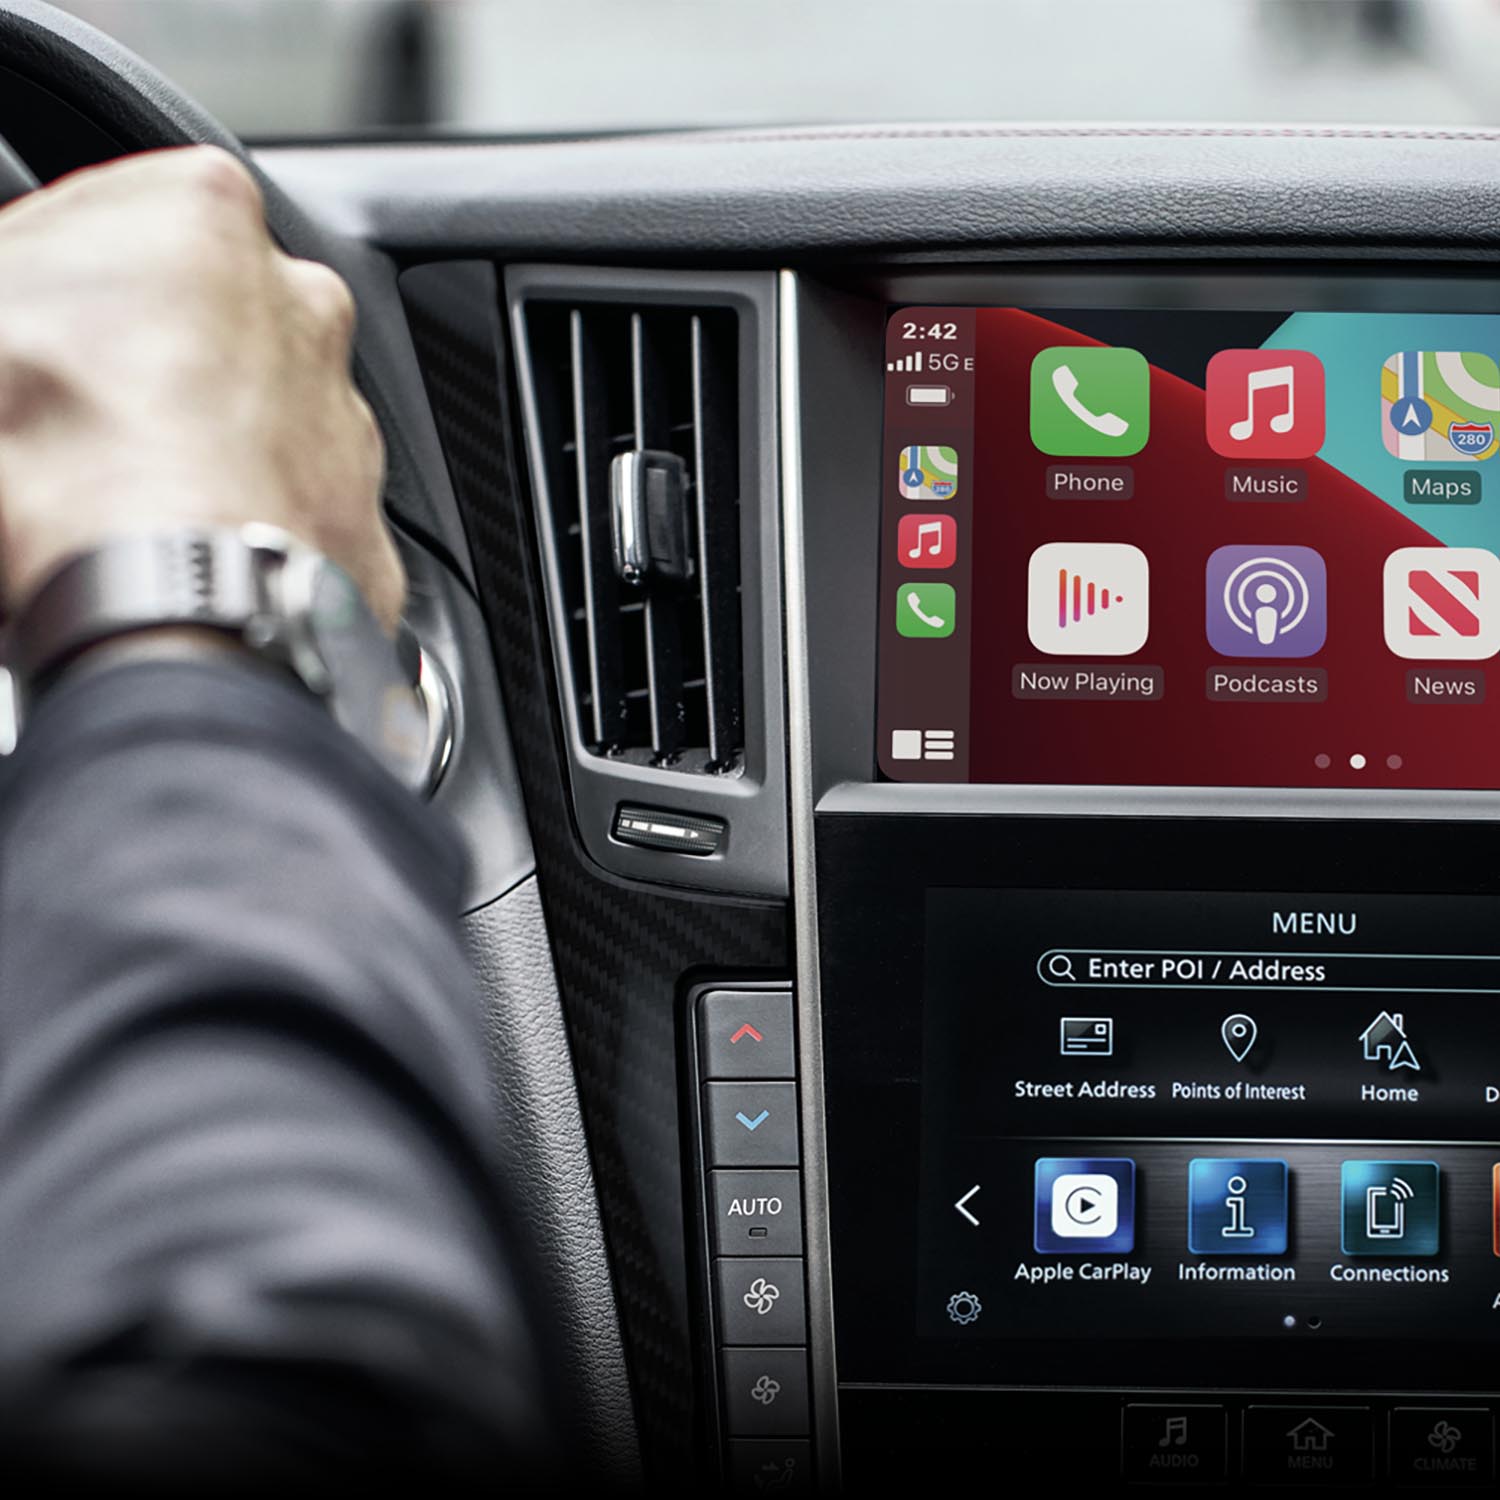 2022 INFINITI Q50 sedan upper and lower touchscreen.